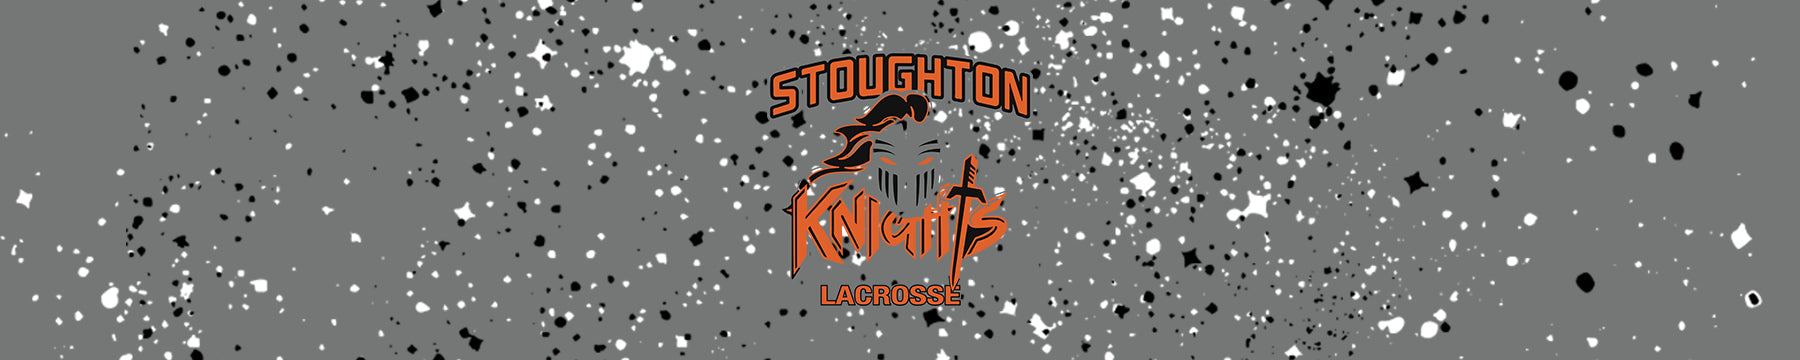 Stoughton Lacrosse